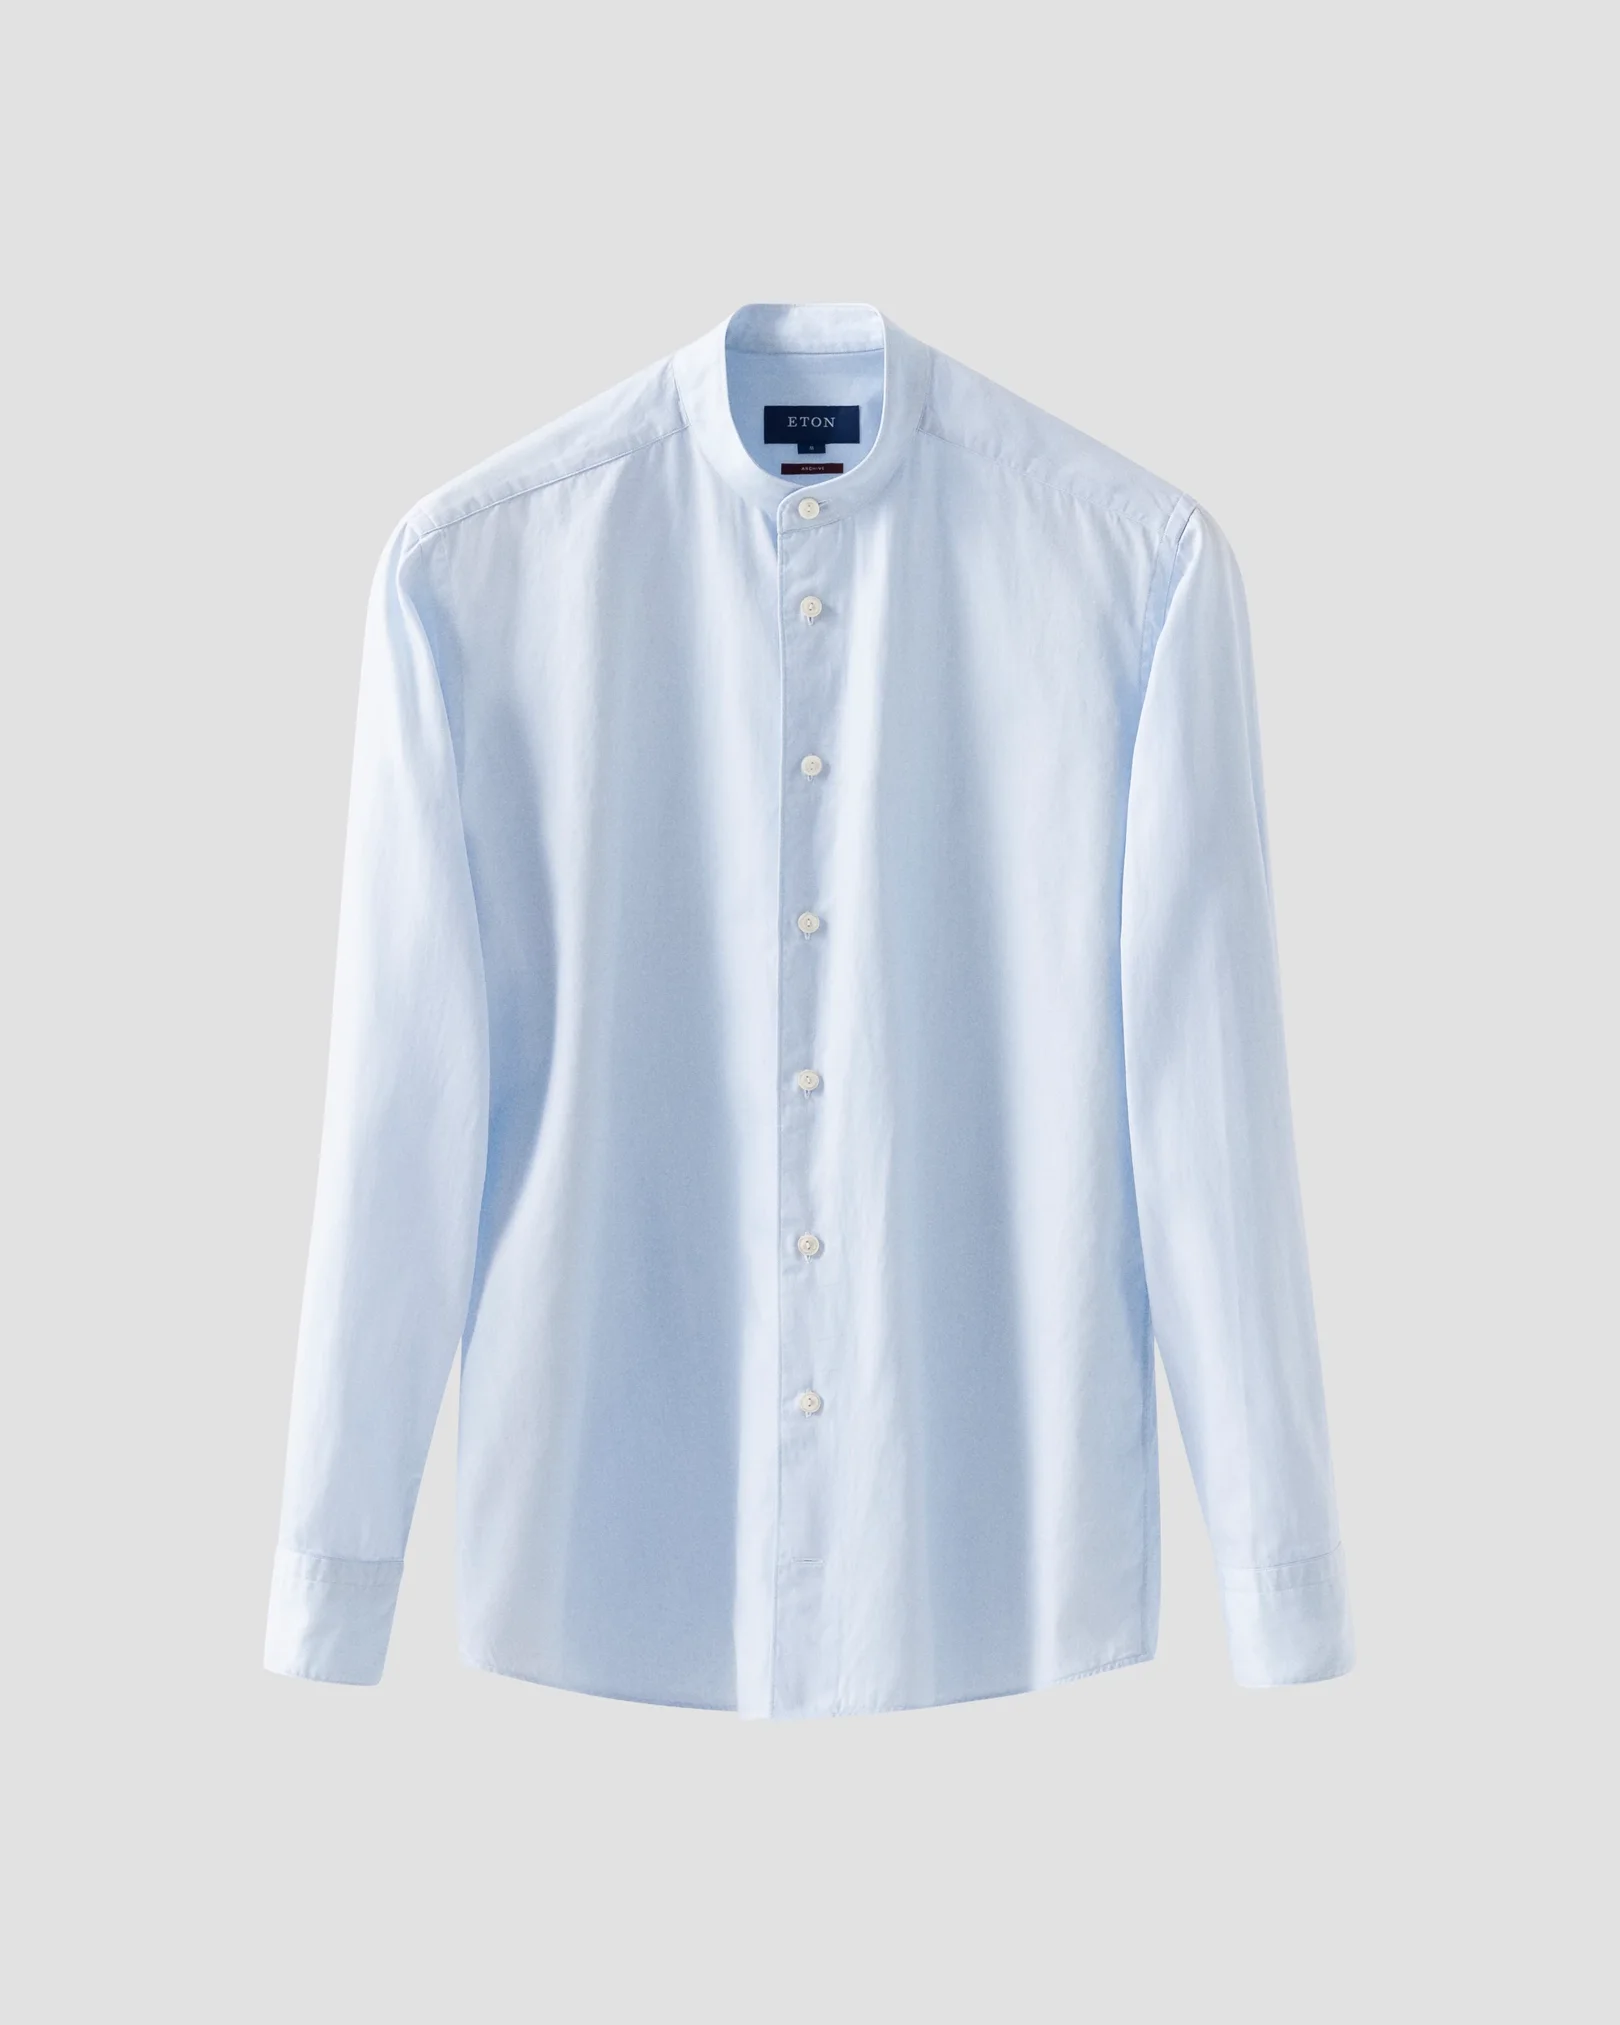 Eton - light blue solid twill band collar shirt